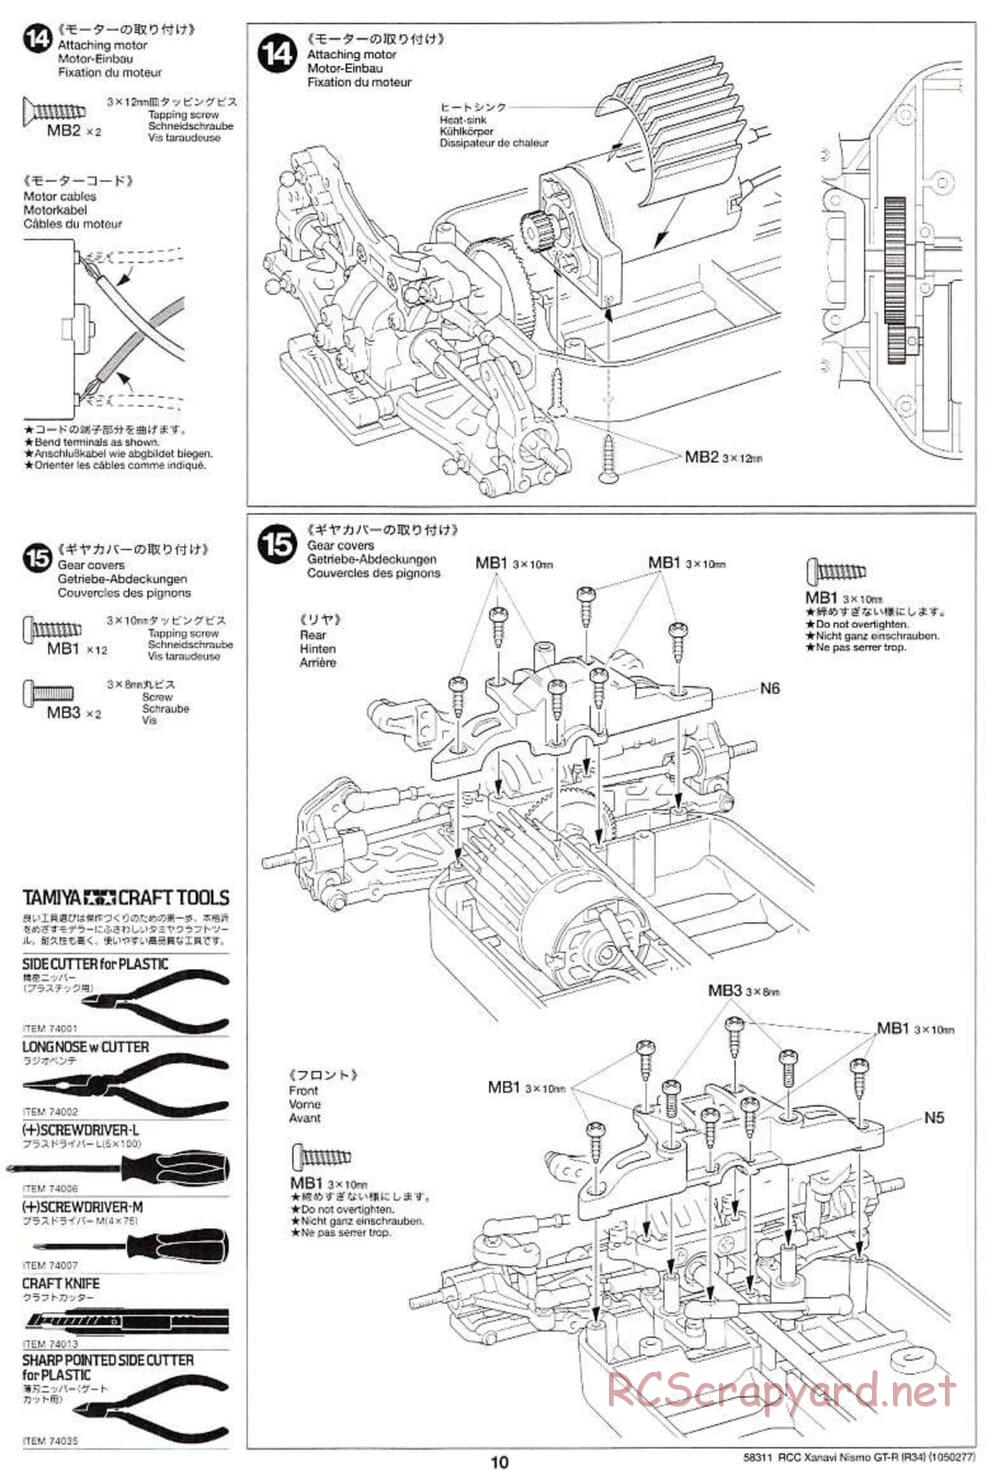 Tamiya - Xanavi Nismo GT-R (R34) - TB-02 Chassis - Manual - Page 10